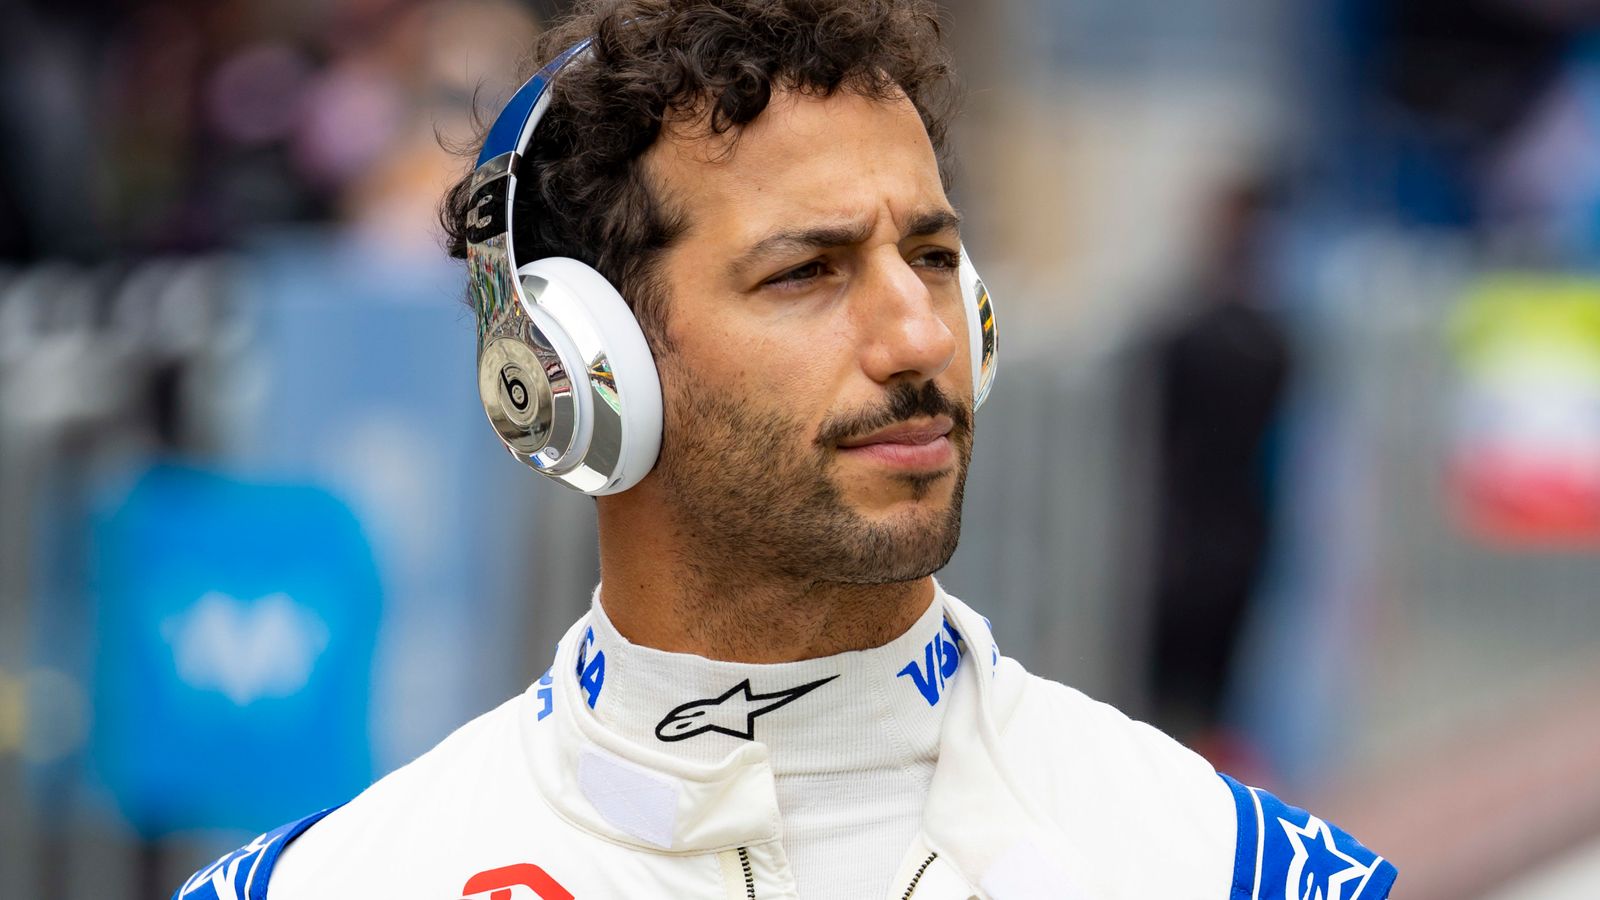 Daniel Ricciardo accuses Lance Stroll of being 'miles off' in judgement ...